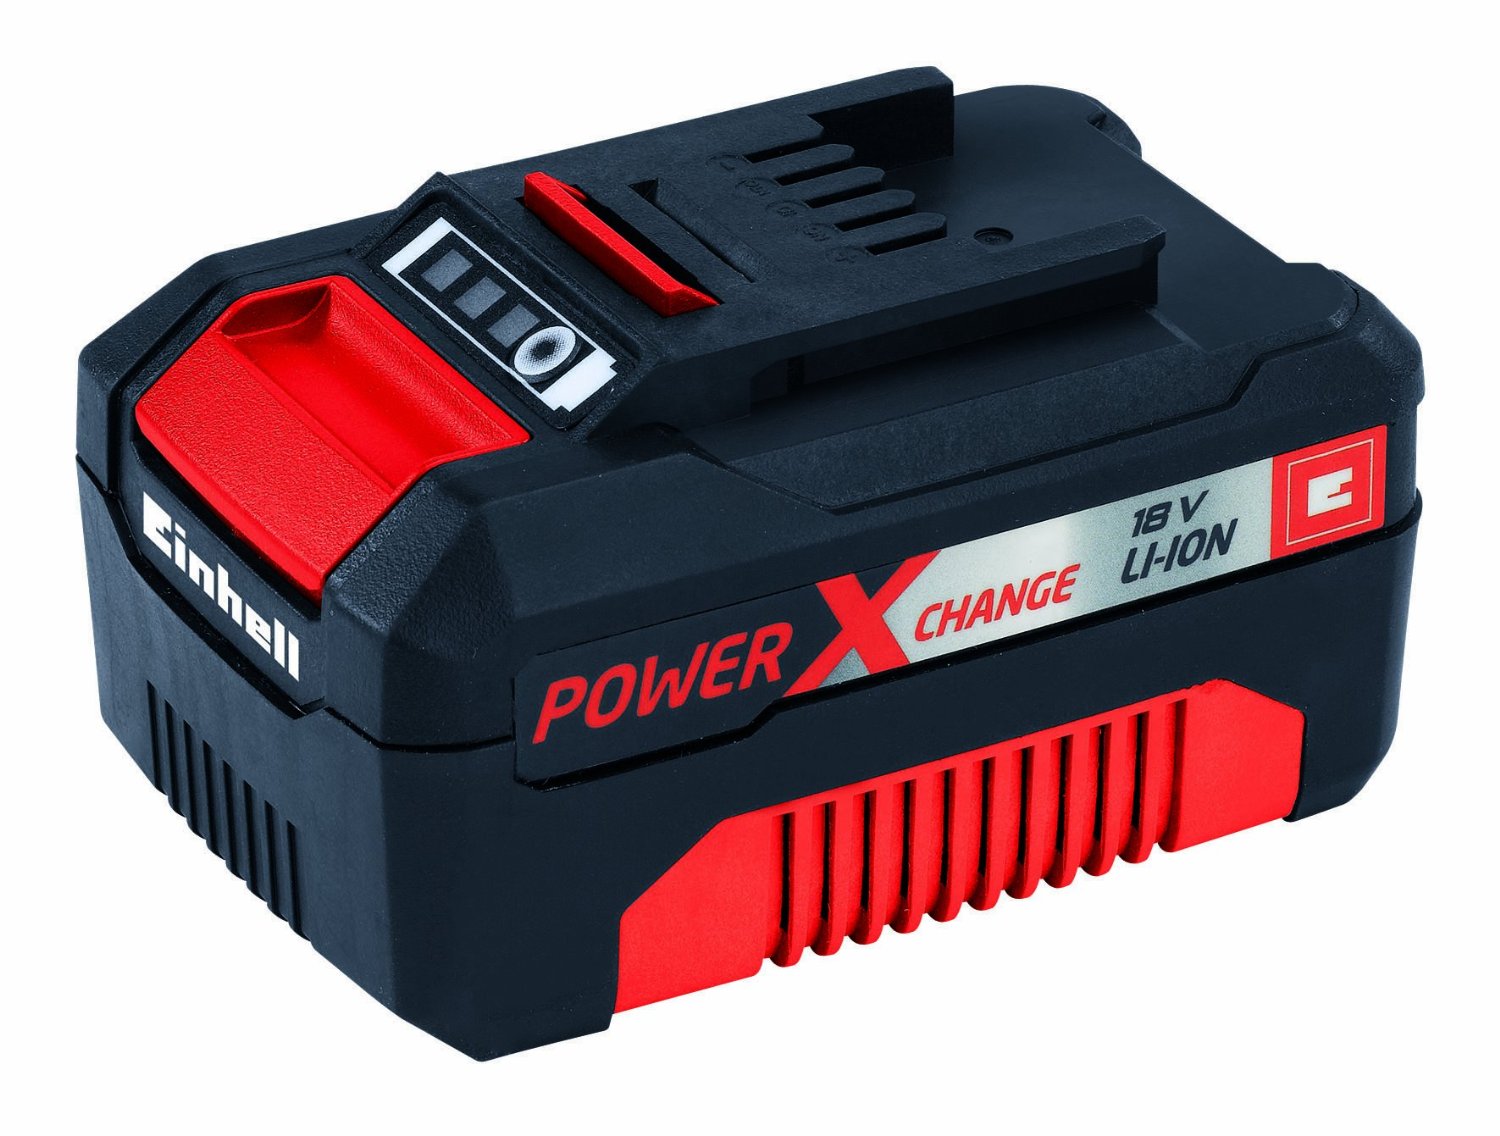 Einhell Power X Change 3Ah 18V Battery